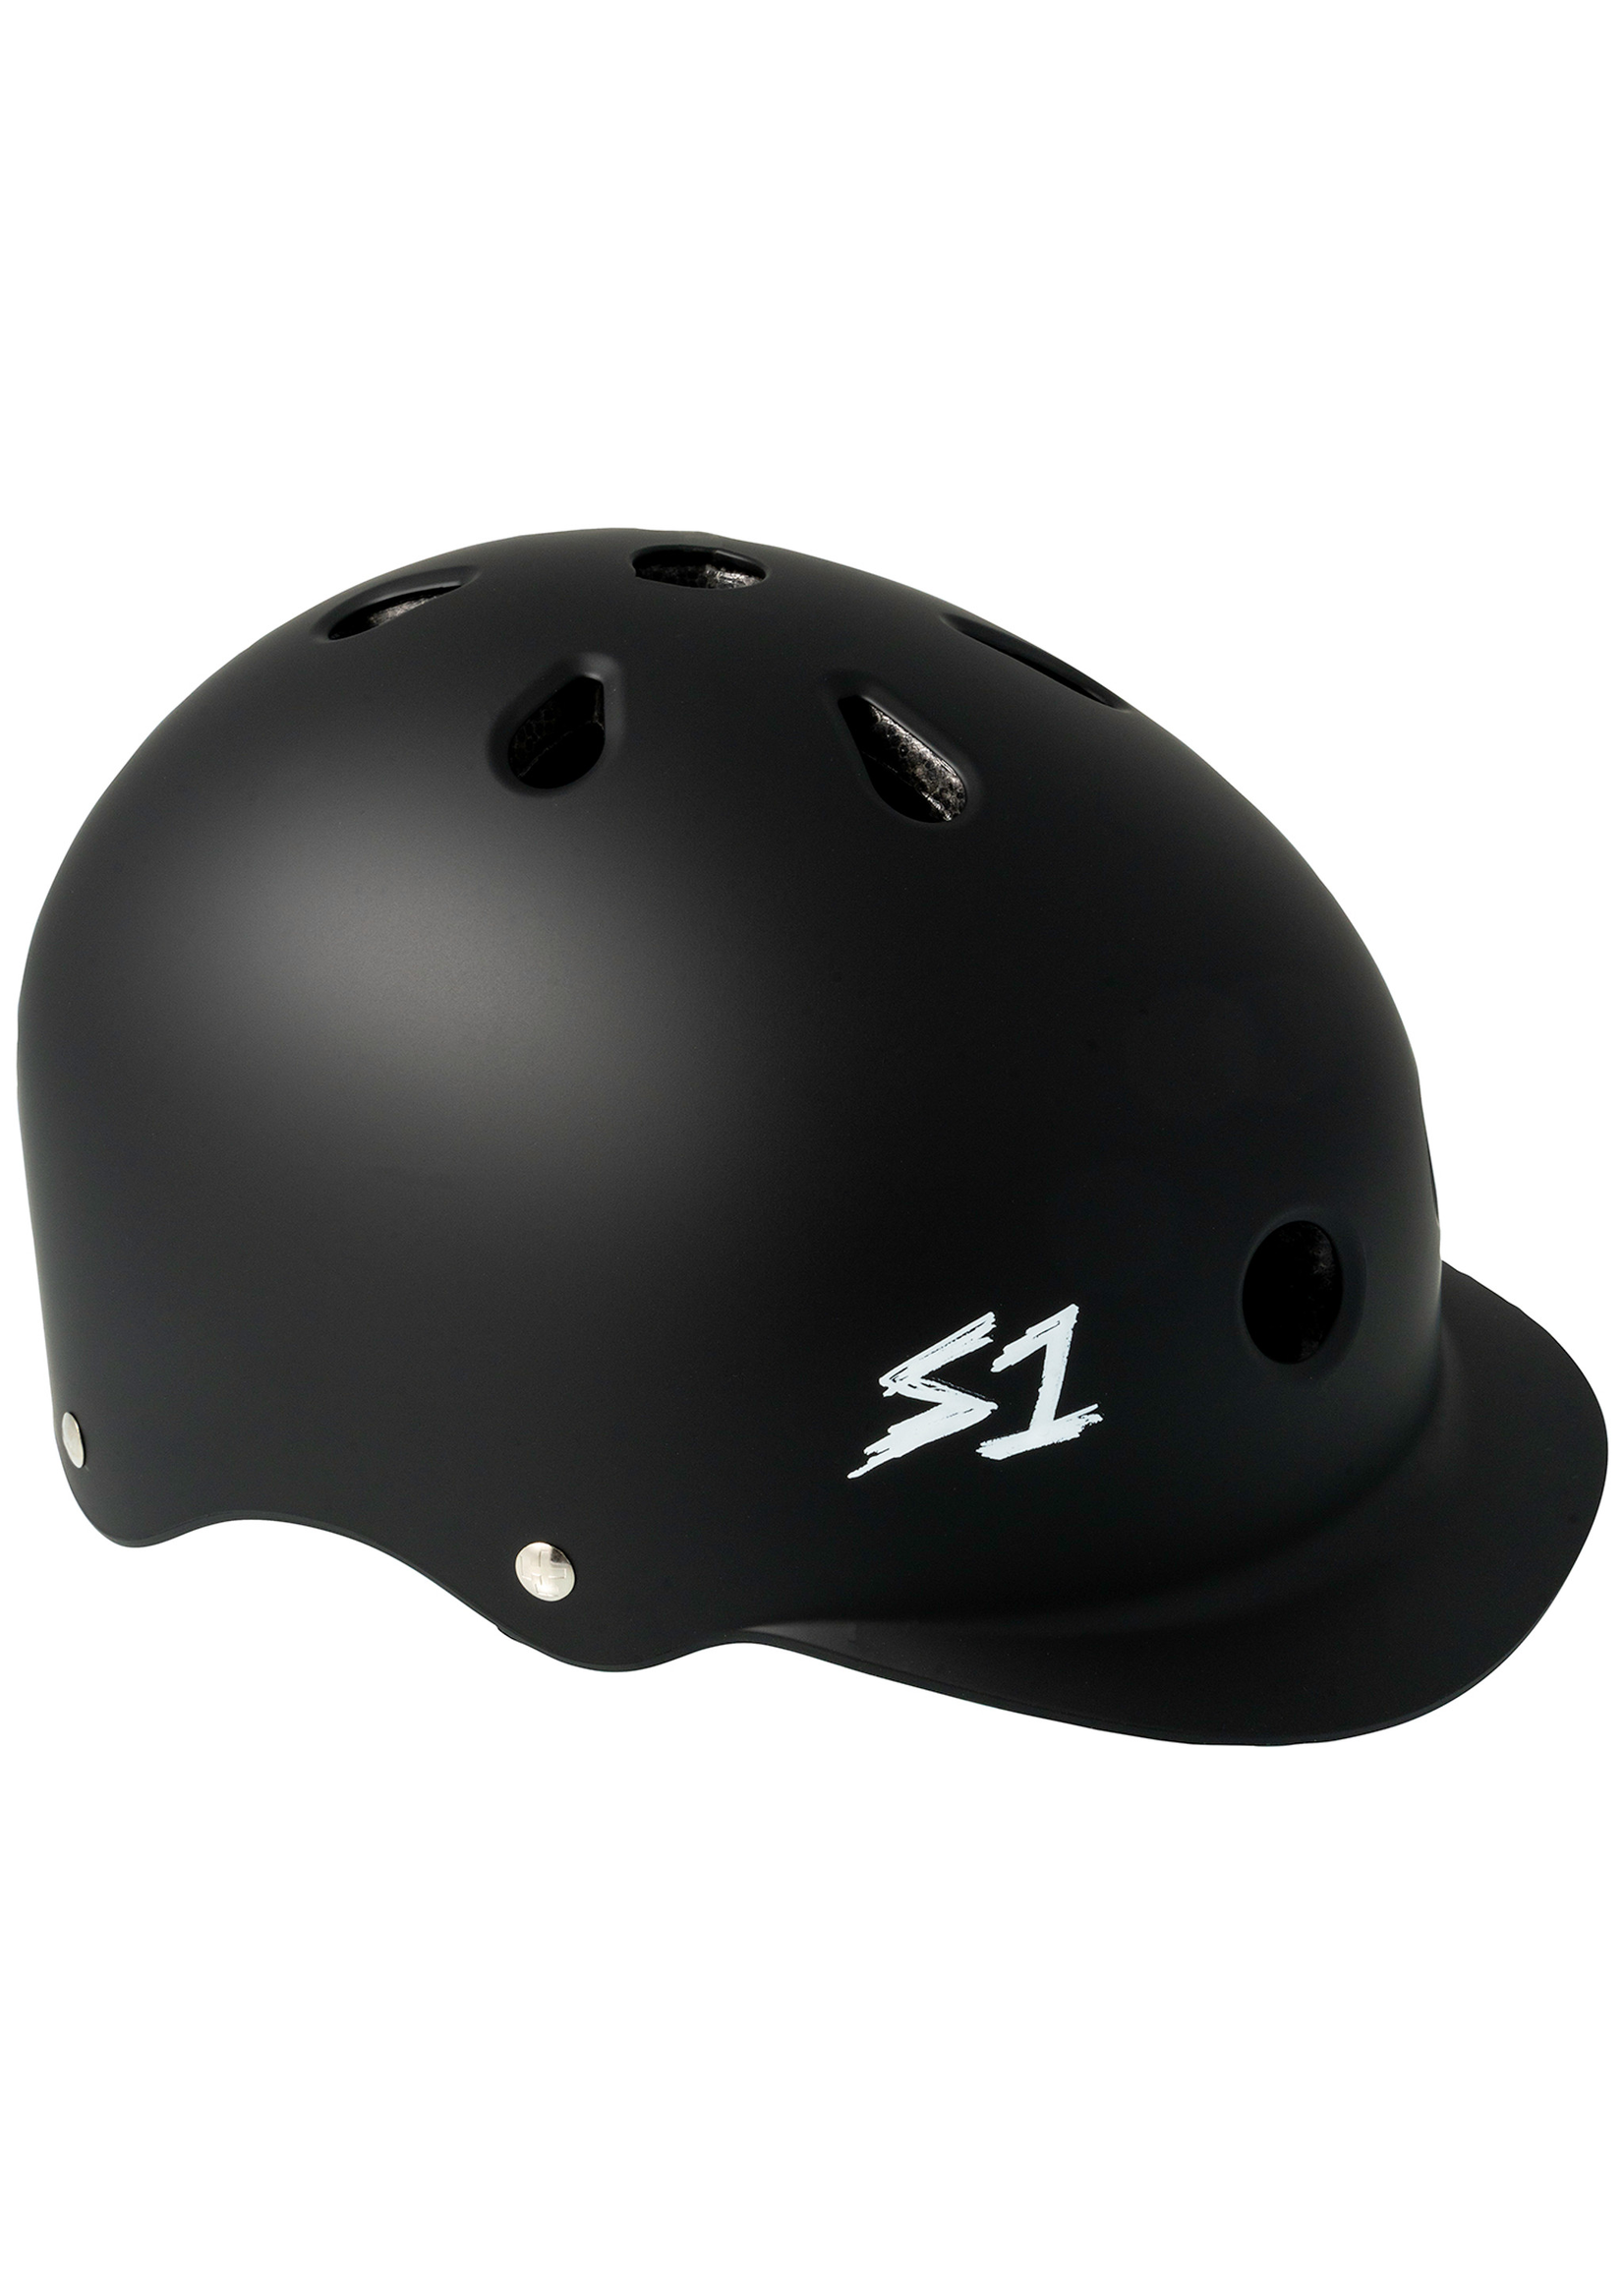 S One Helmet Co Lifer Brim Black Matte